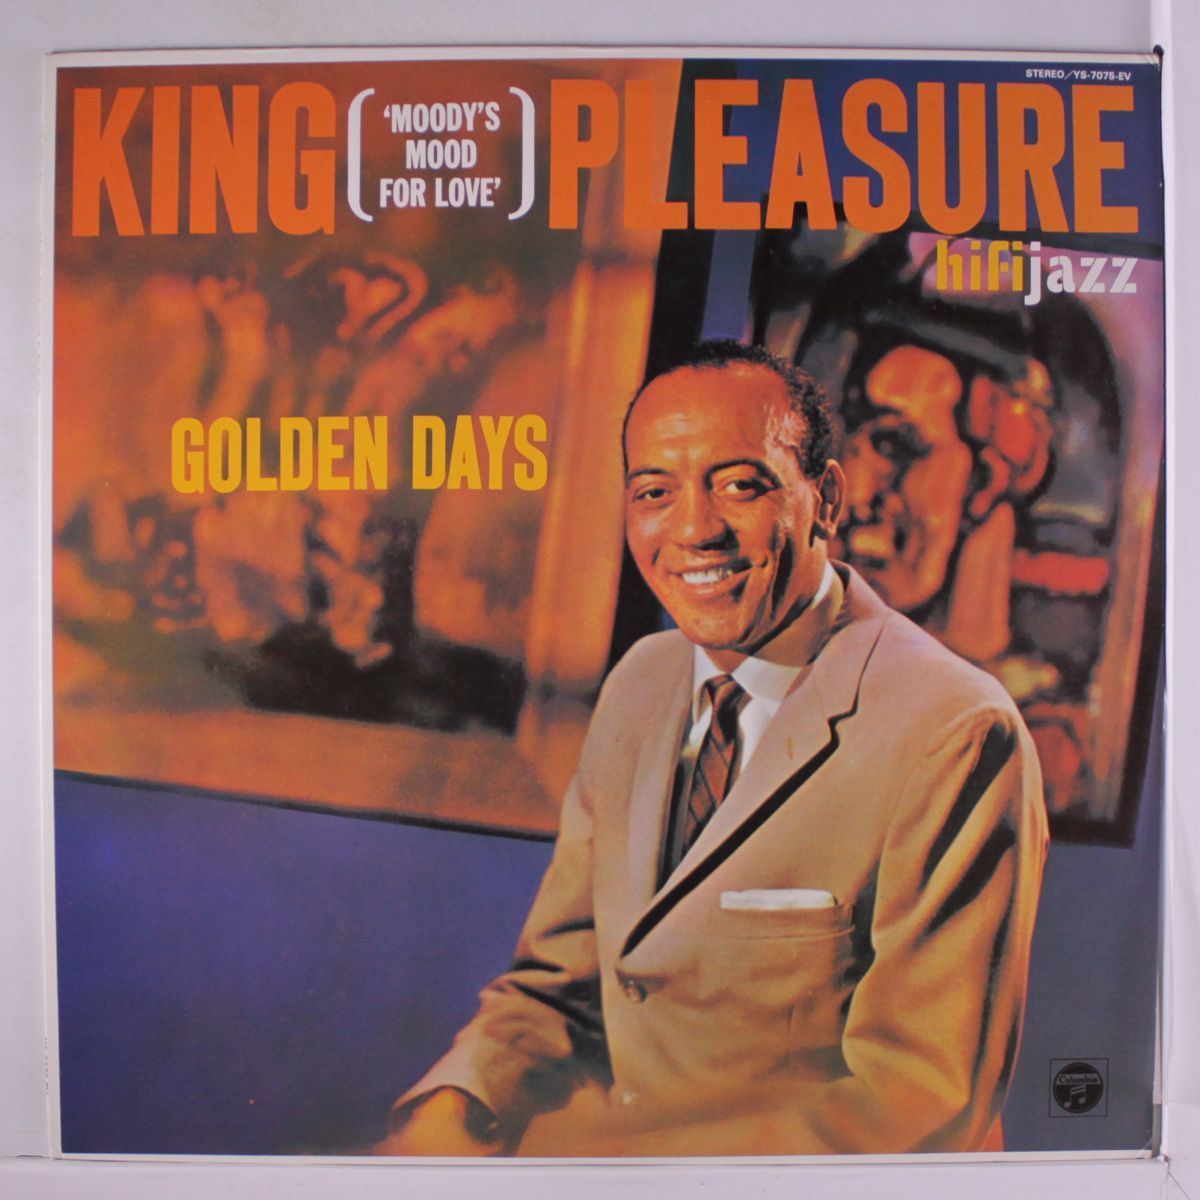 King pleasure golden days